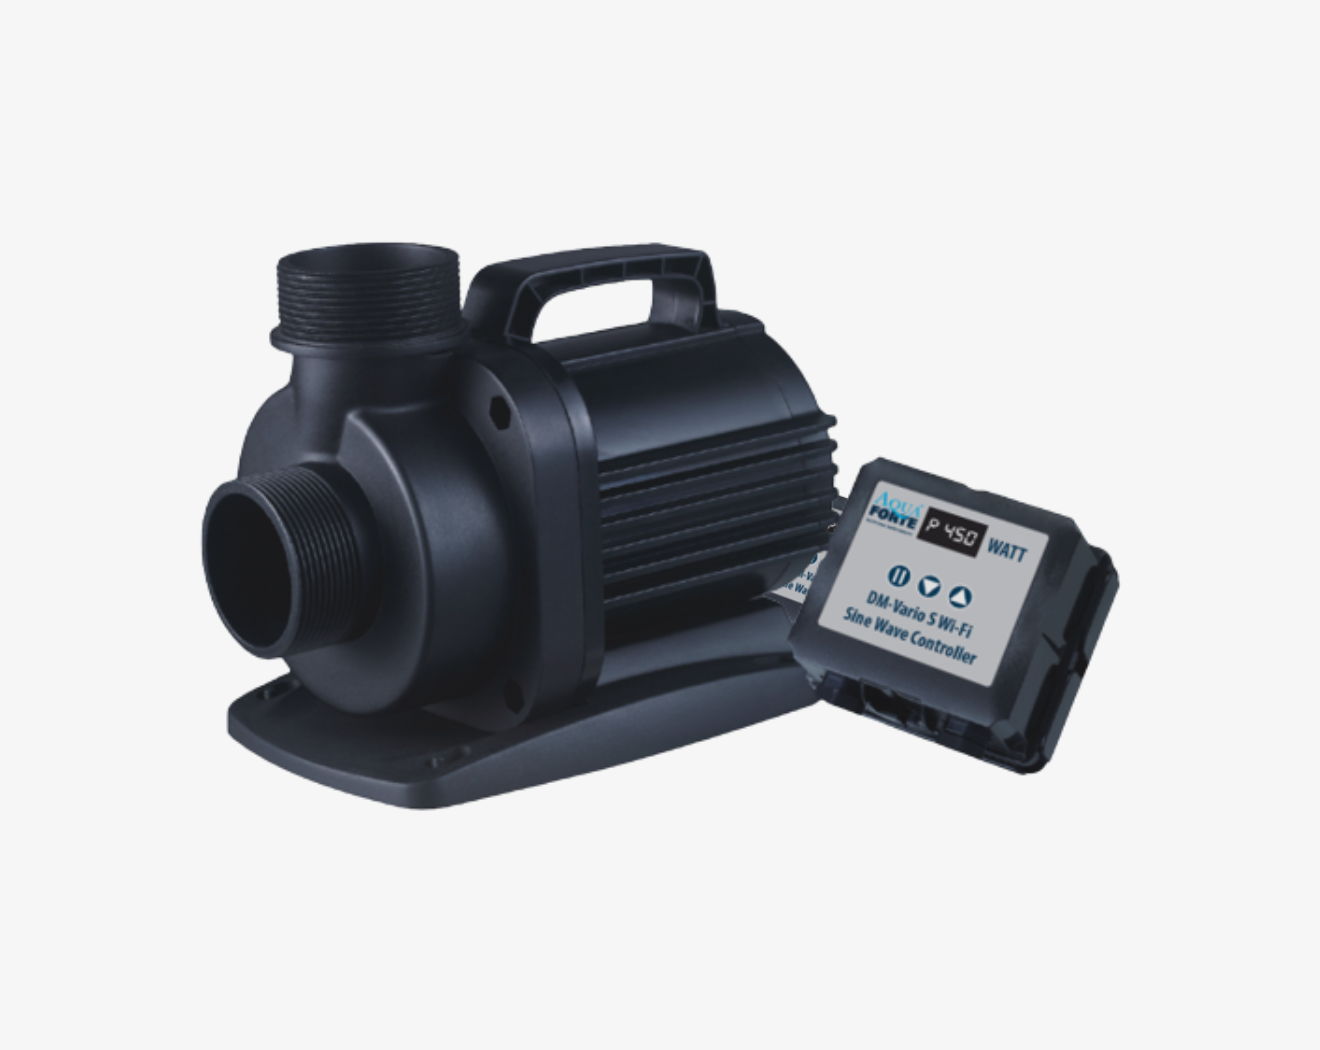 AquaForte-DM-Vario-S-20000-vijverpomp-met-Wi-Fi